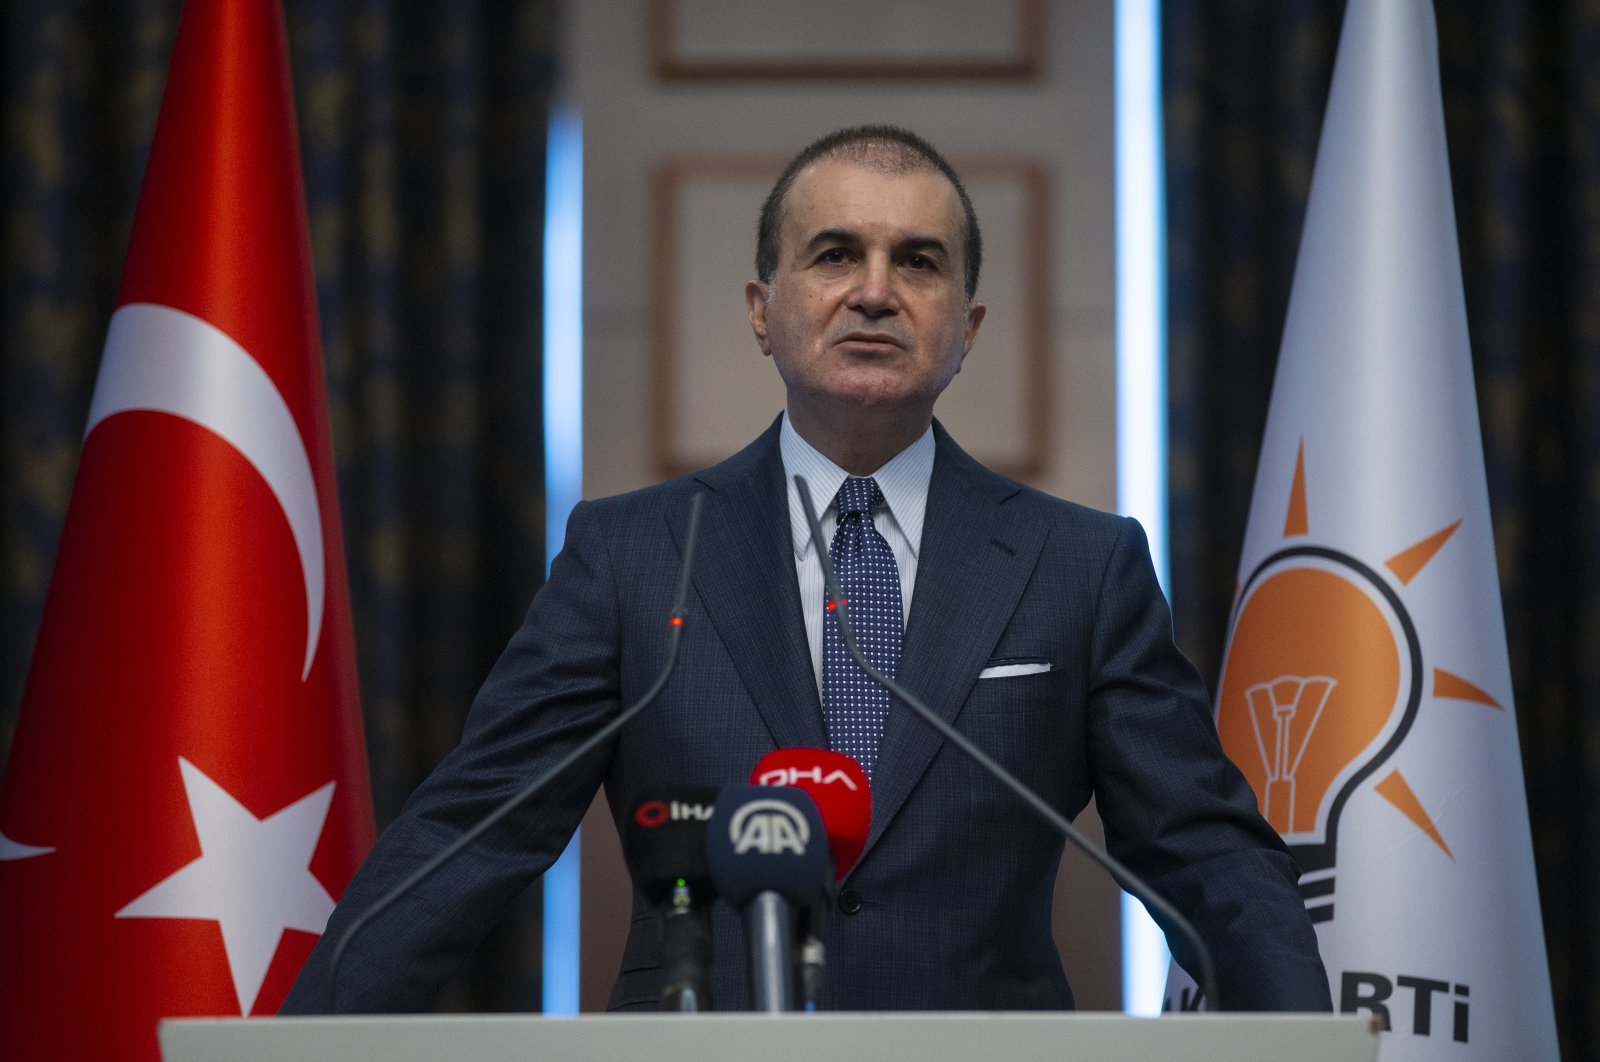 Ömer Çelik speaks at a news conference in Ankara, Turkey, May 4, 2020. (AA Photo)